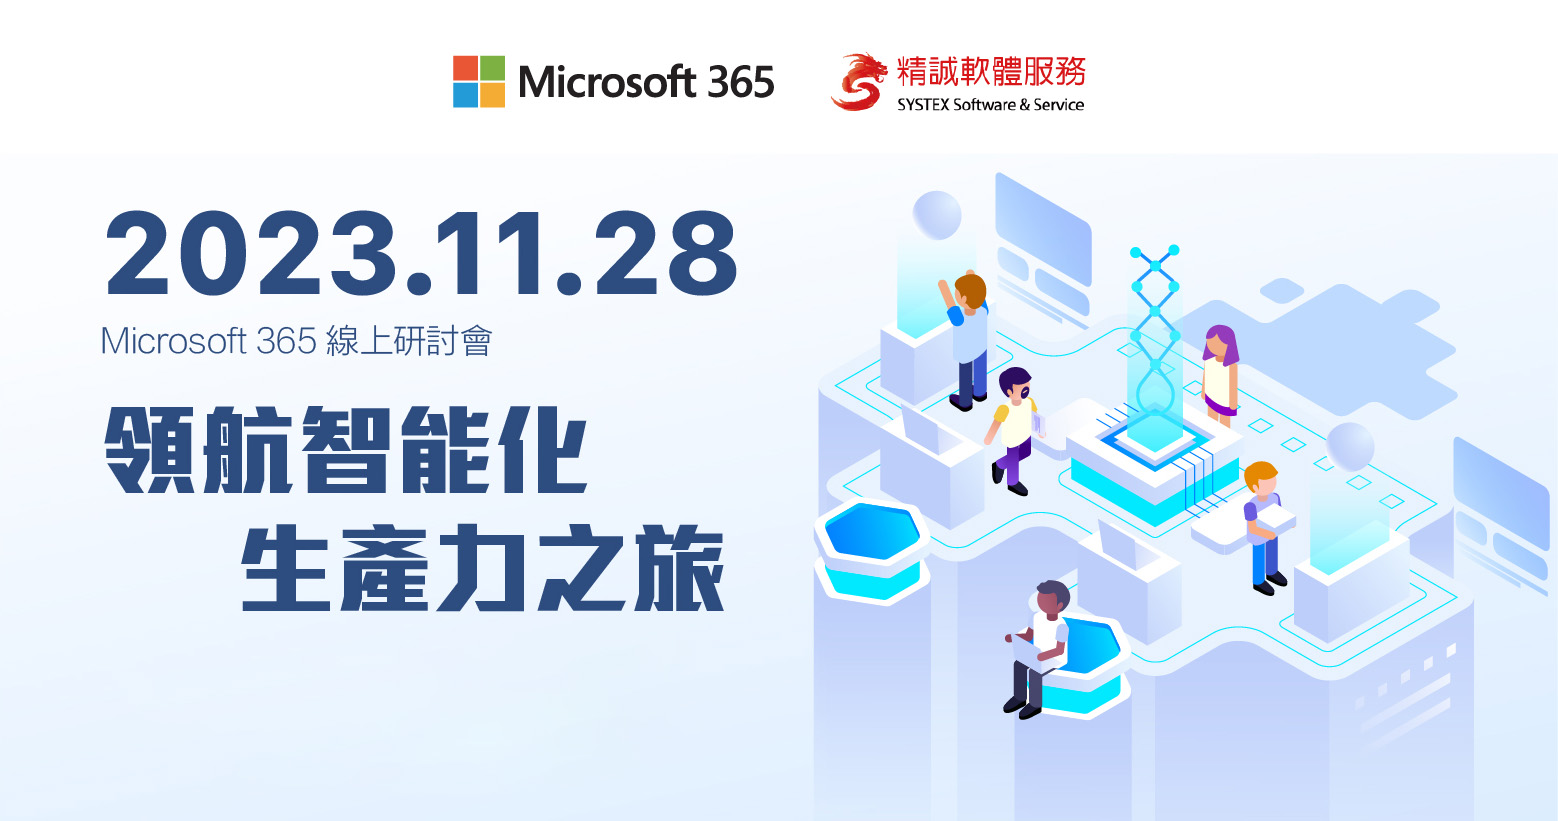 11/ 28 Microsoft 365 線上研討會：領航智能化生產力之旅